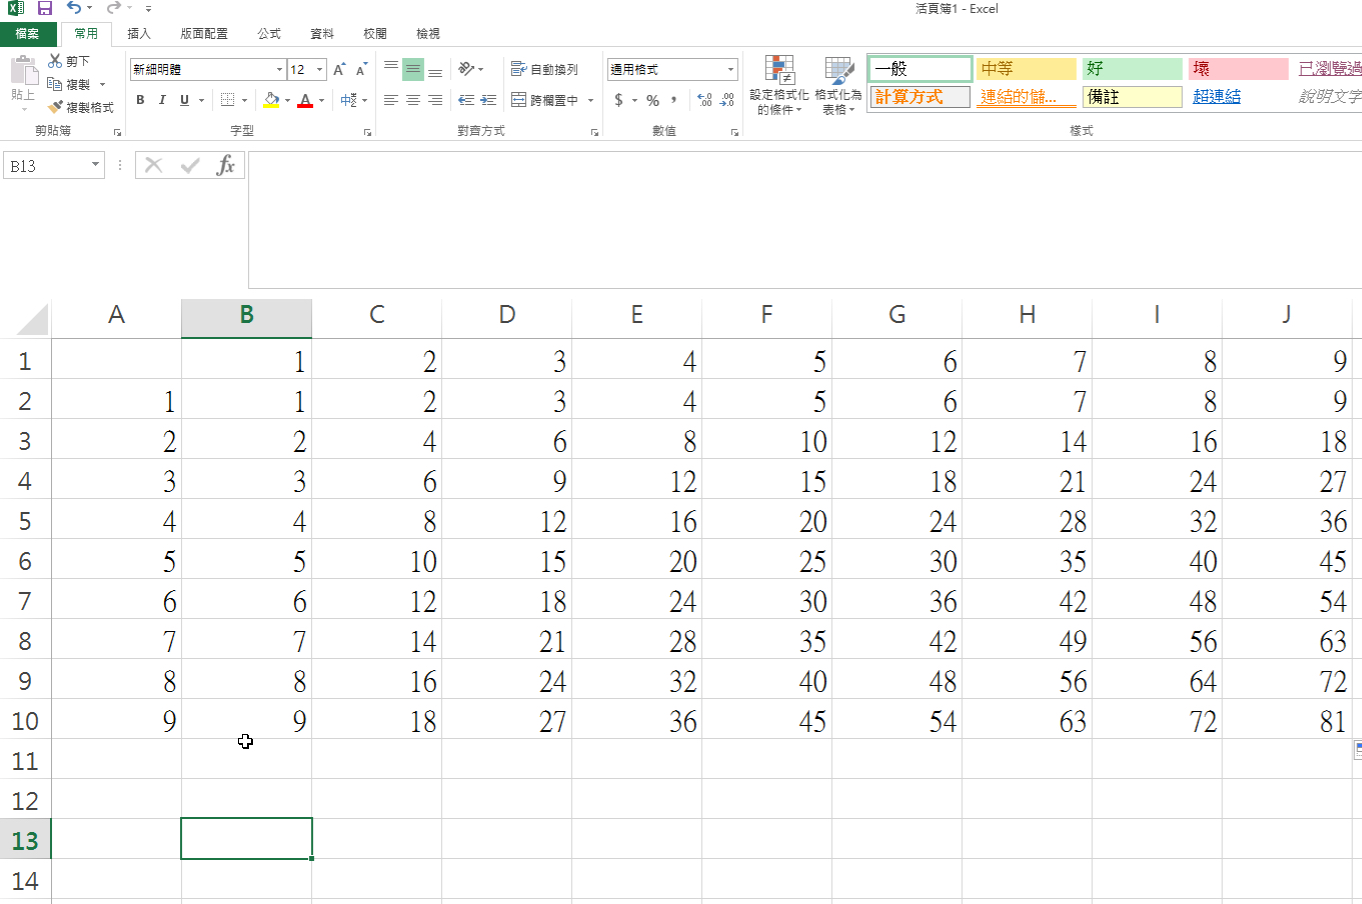 Excel 基礎應用教學 Part II，搞懂定位這件事，活用打造九九乘法表